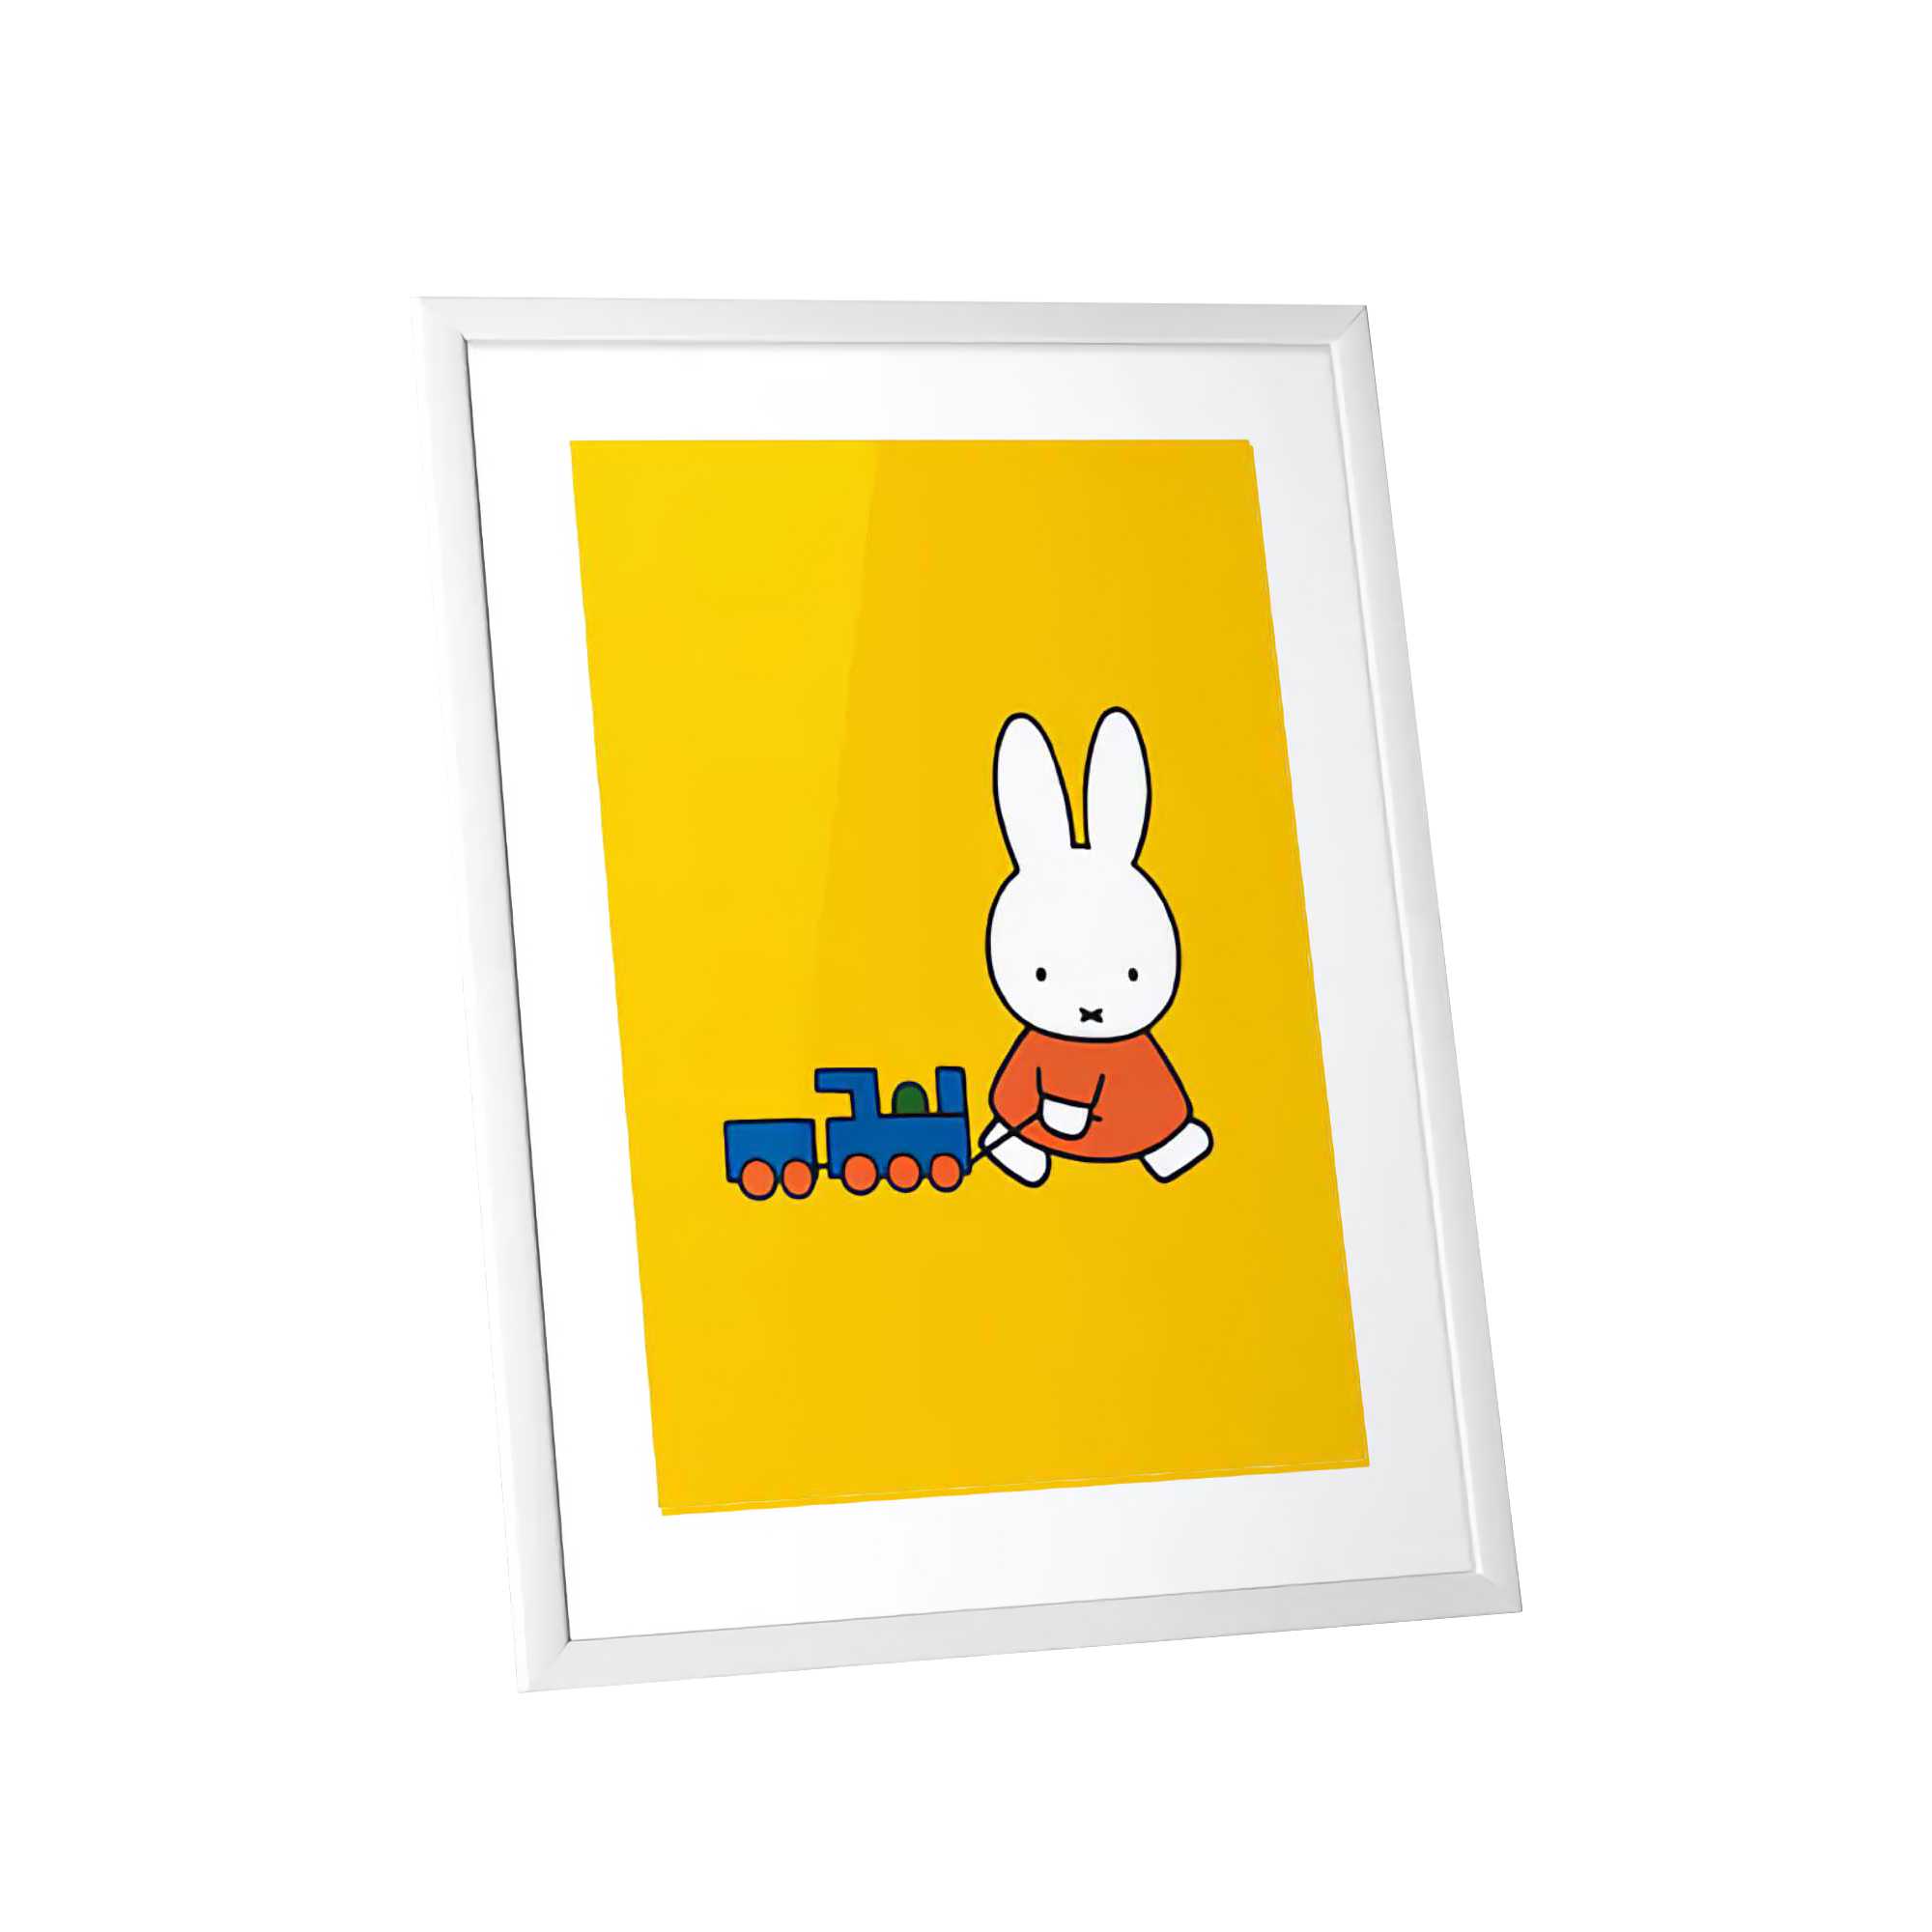 Star Editions Miffy Framed Print, train (11x14")